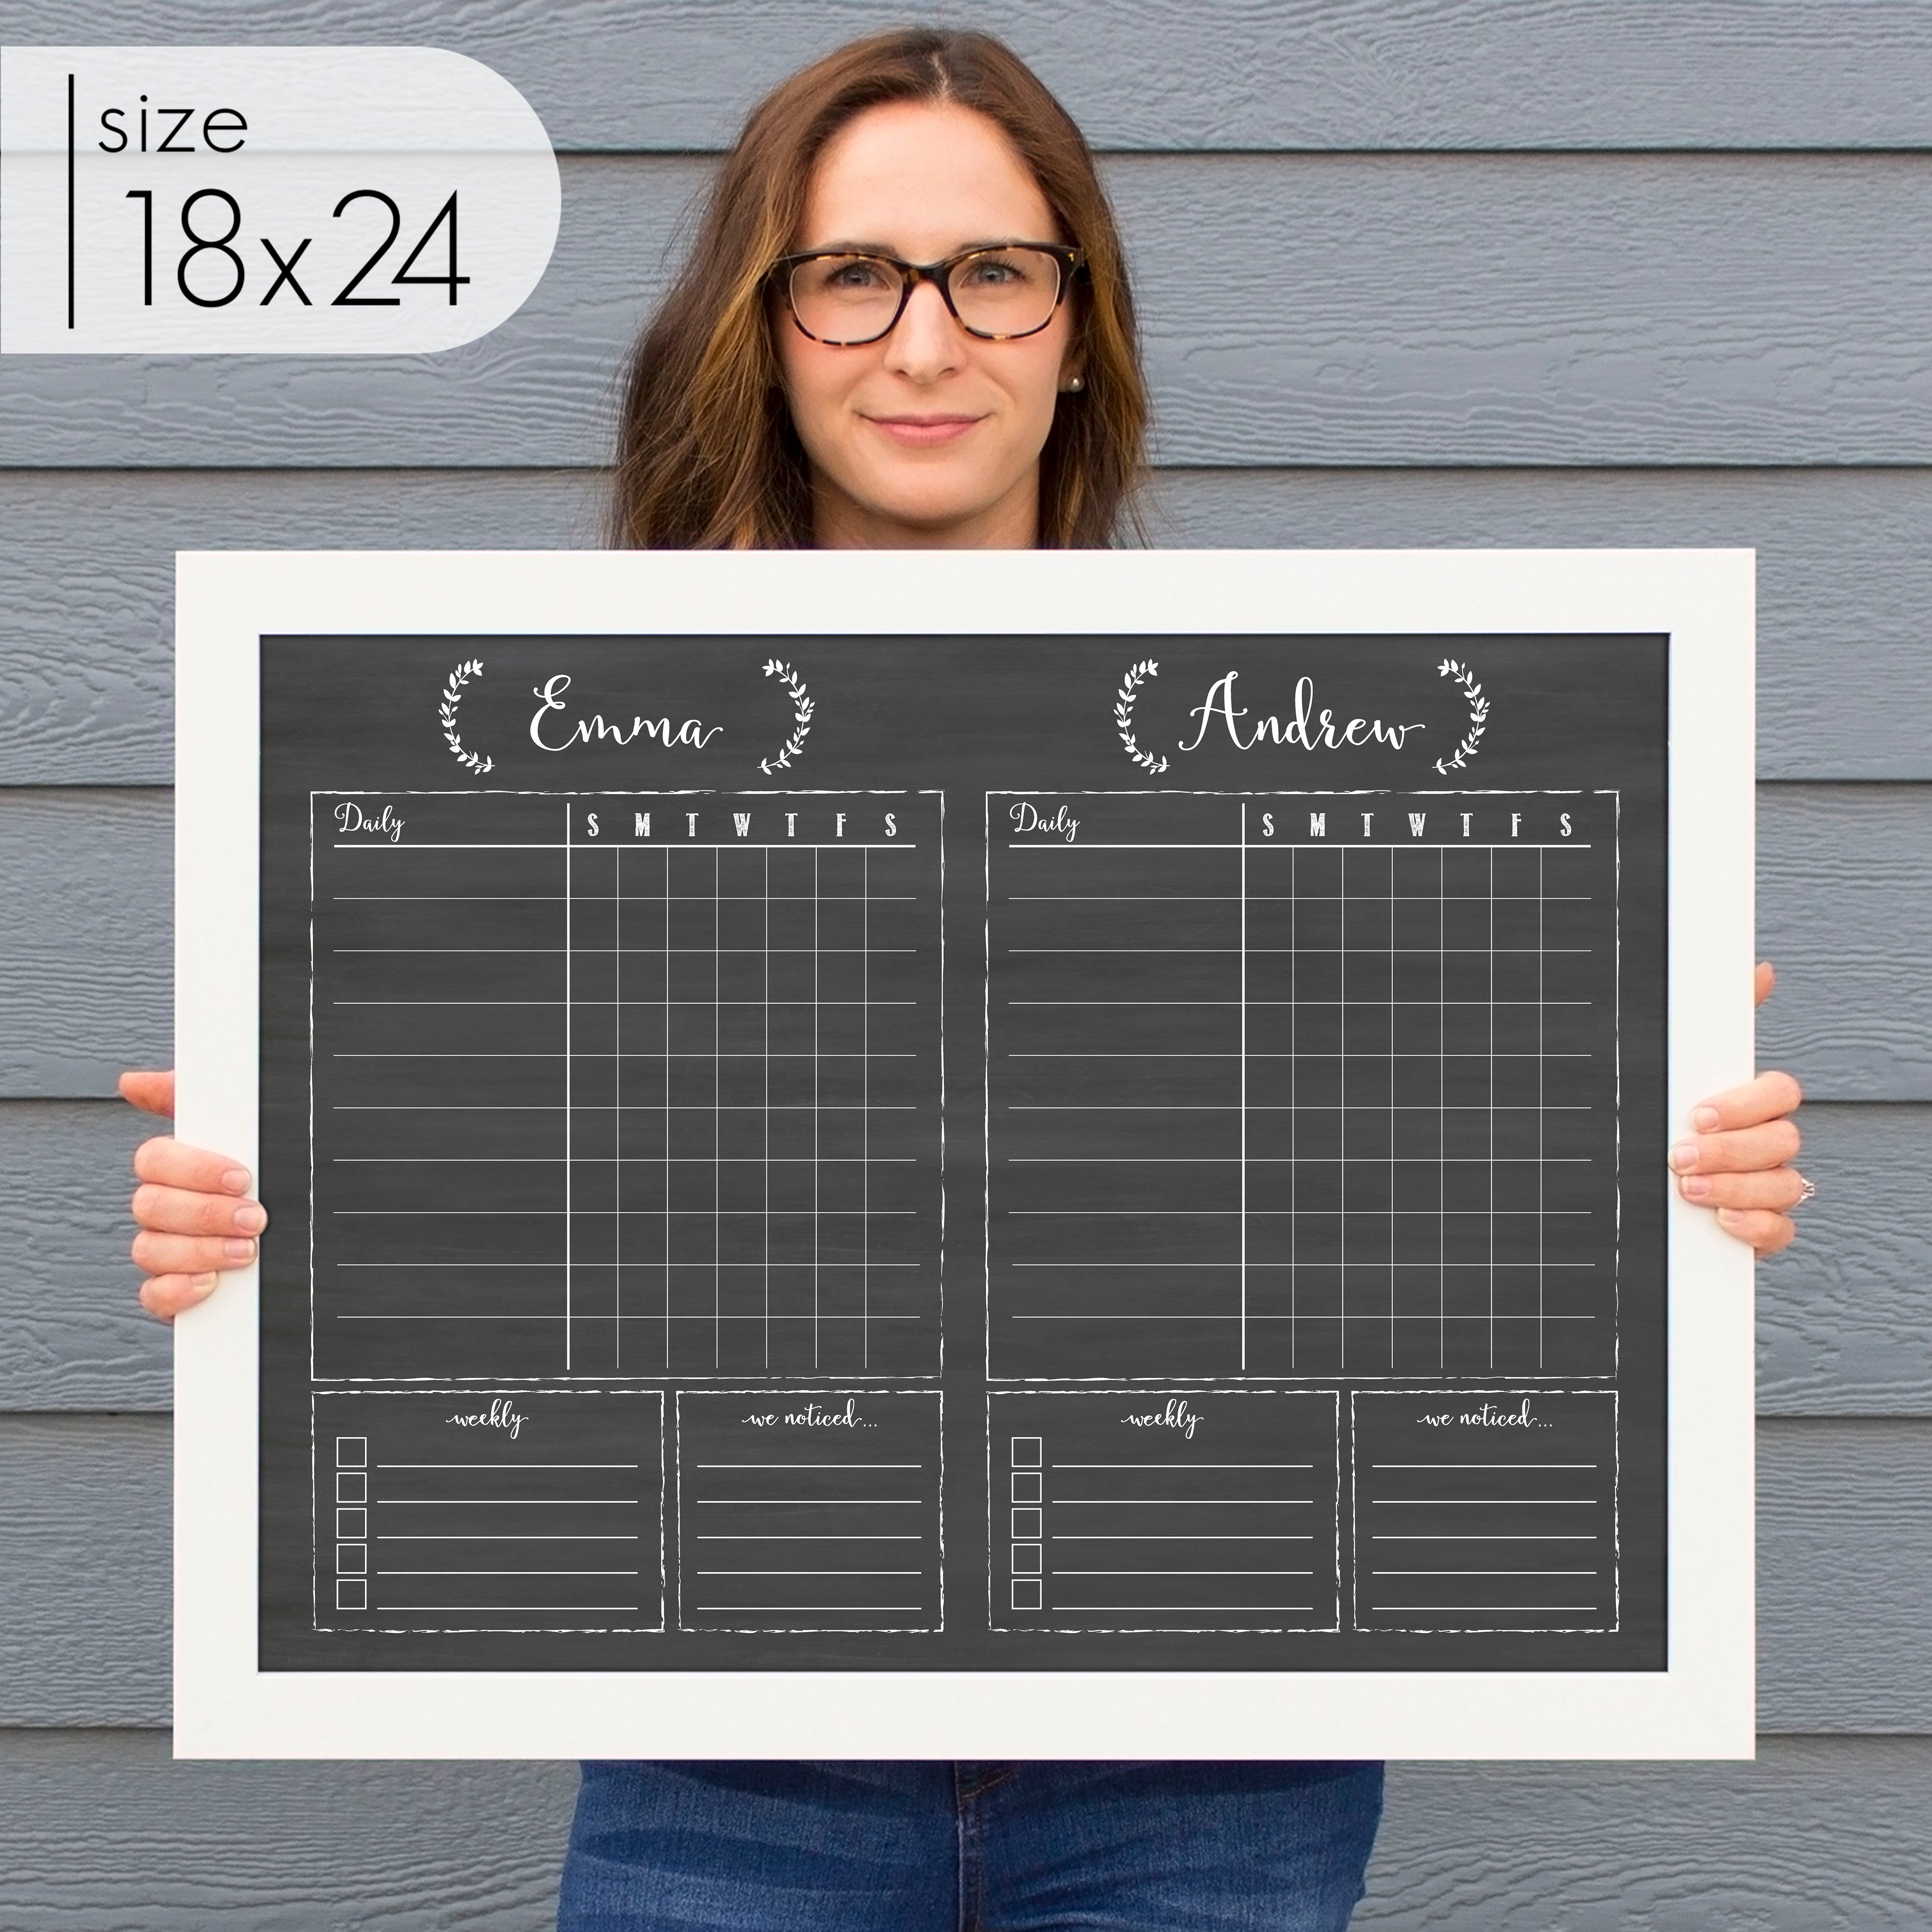 2 Person Framed Chalkboard Chore Chart  | Horizontal Eagleton